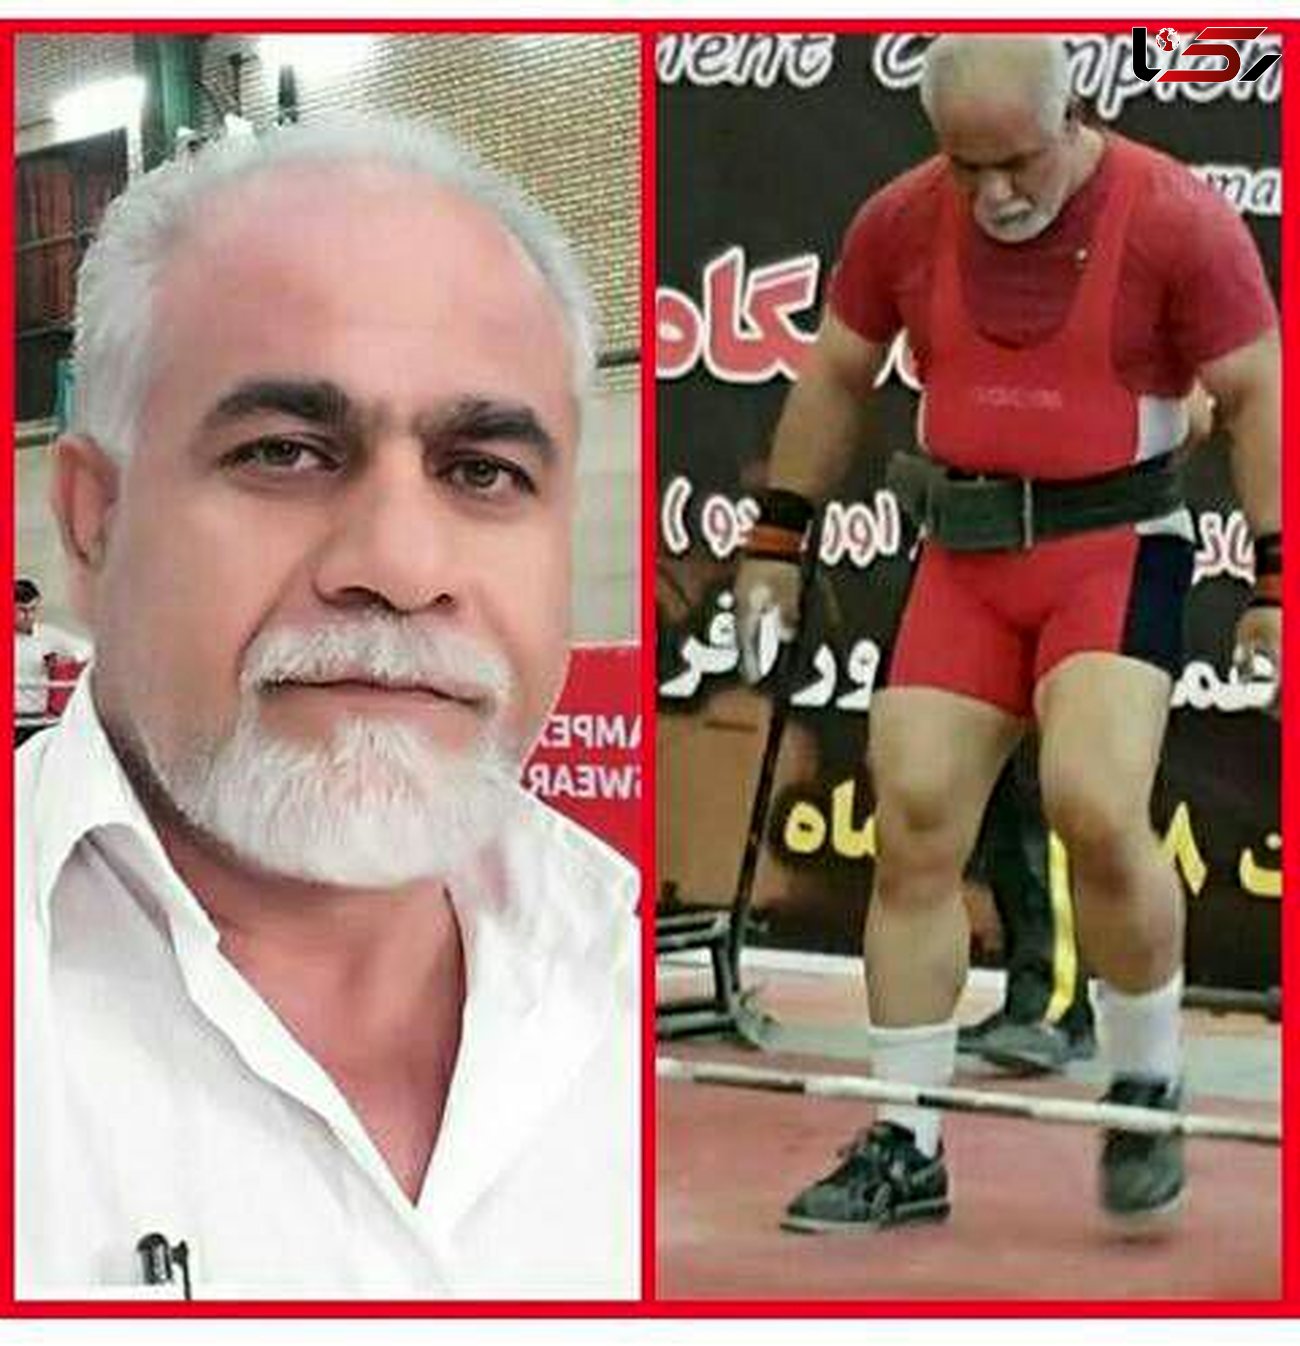 قتل ورزشکار پرورش اندام در خوزستان + عکس